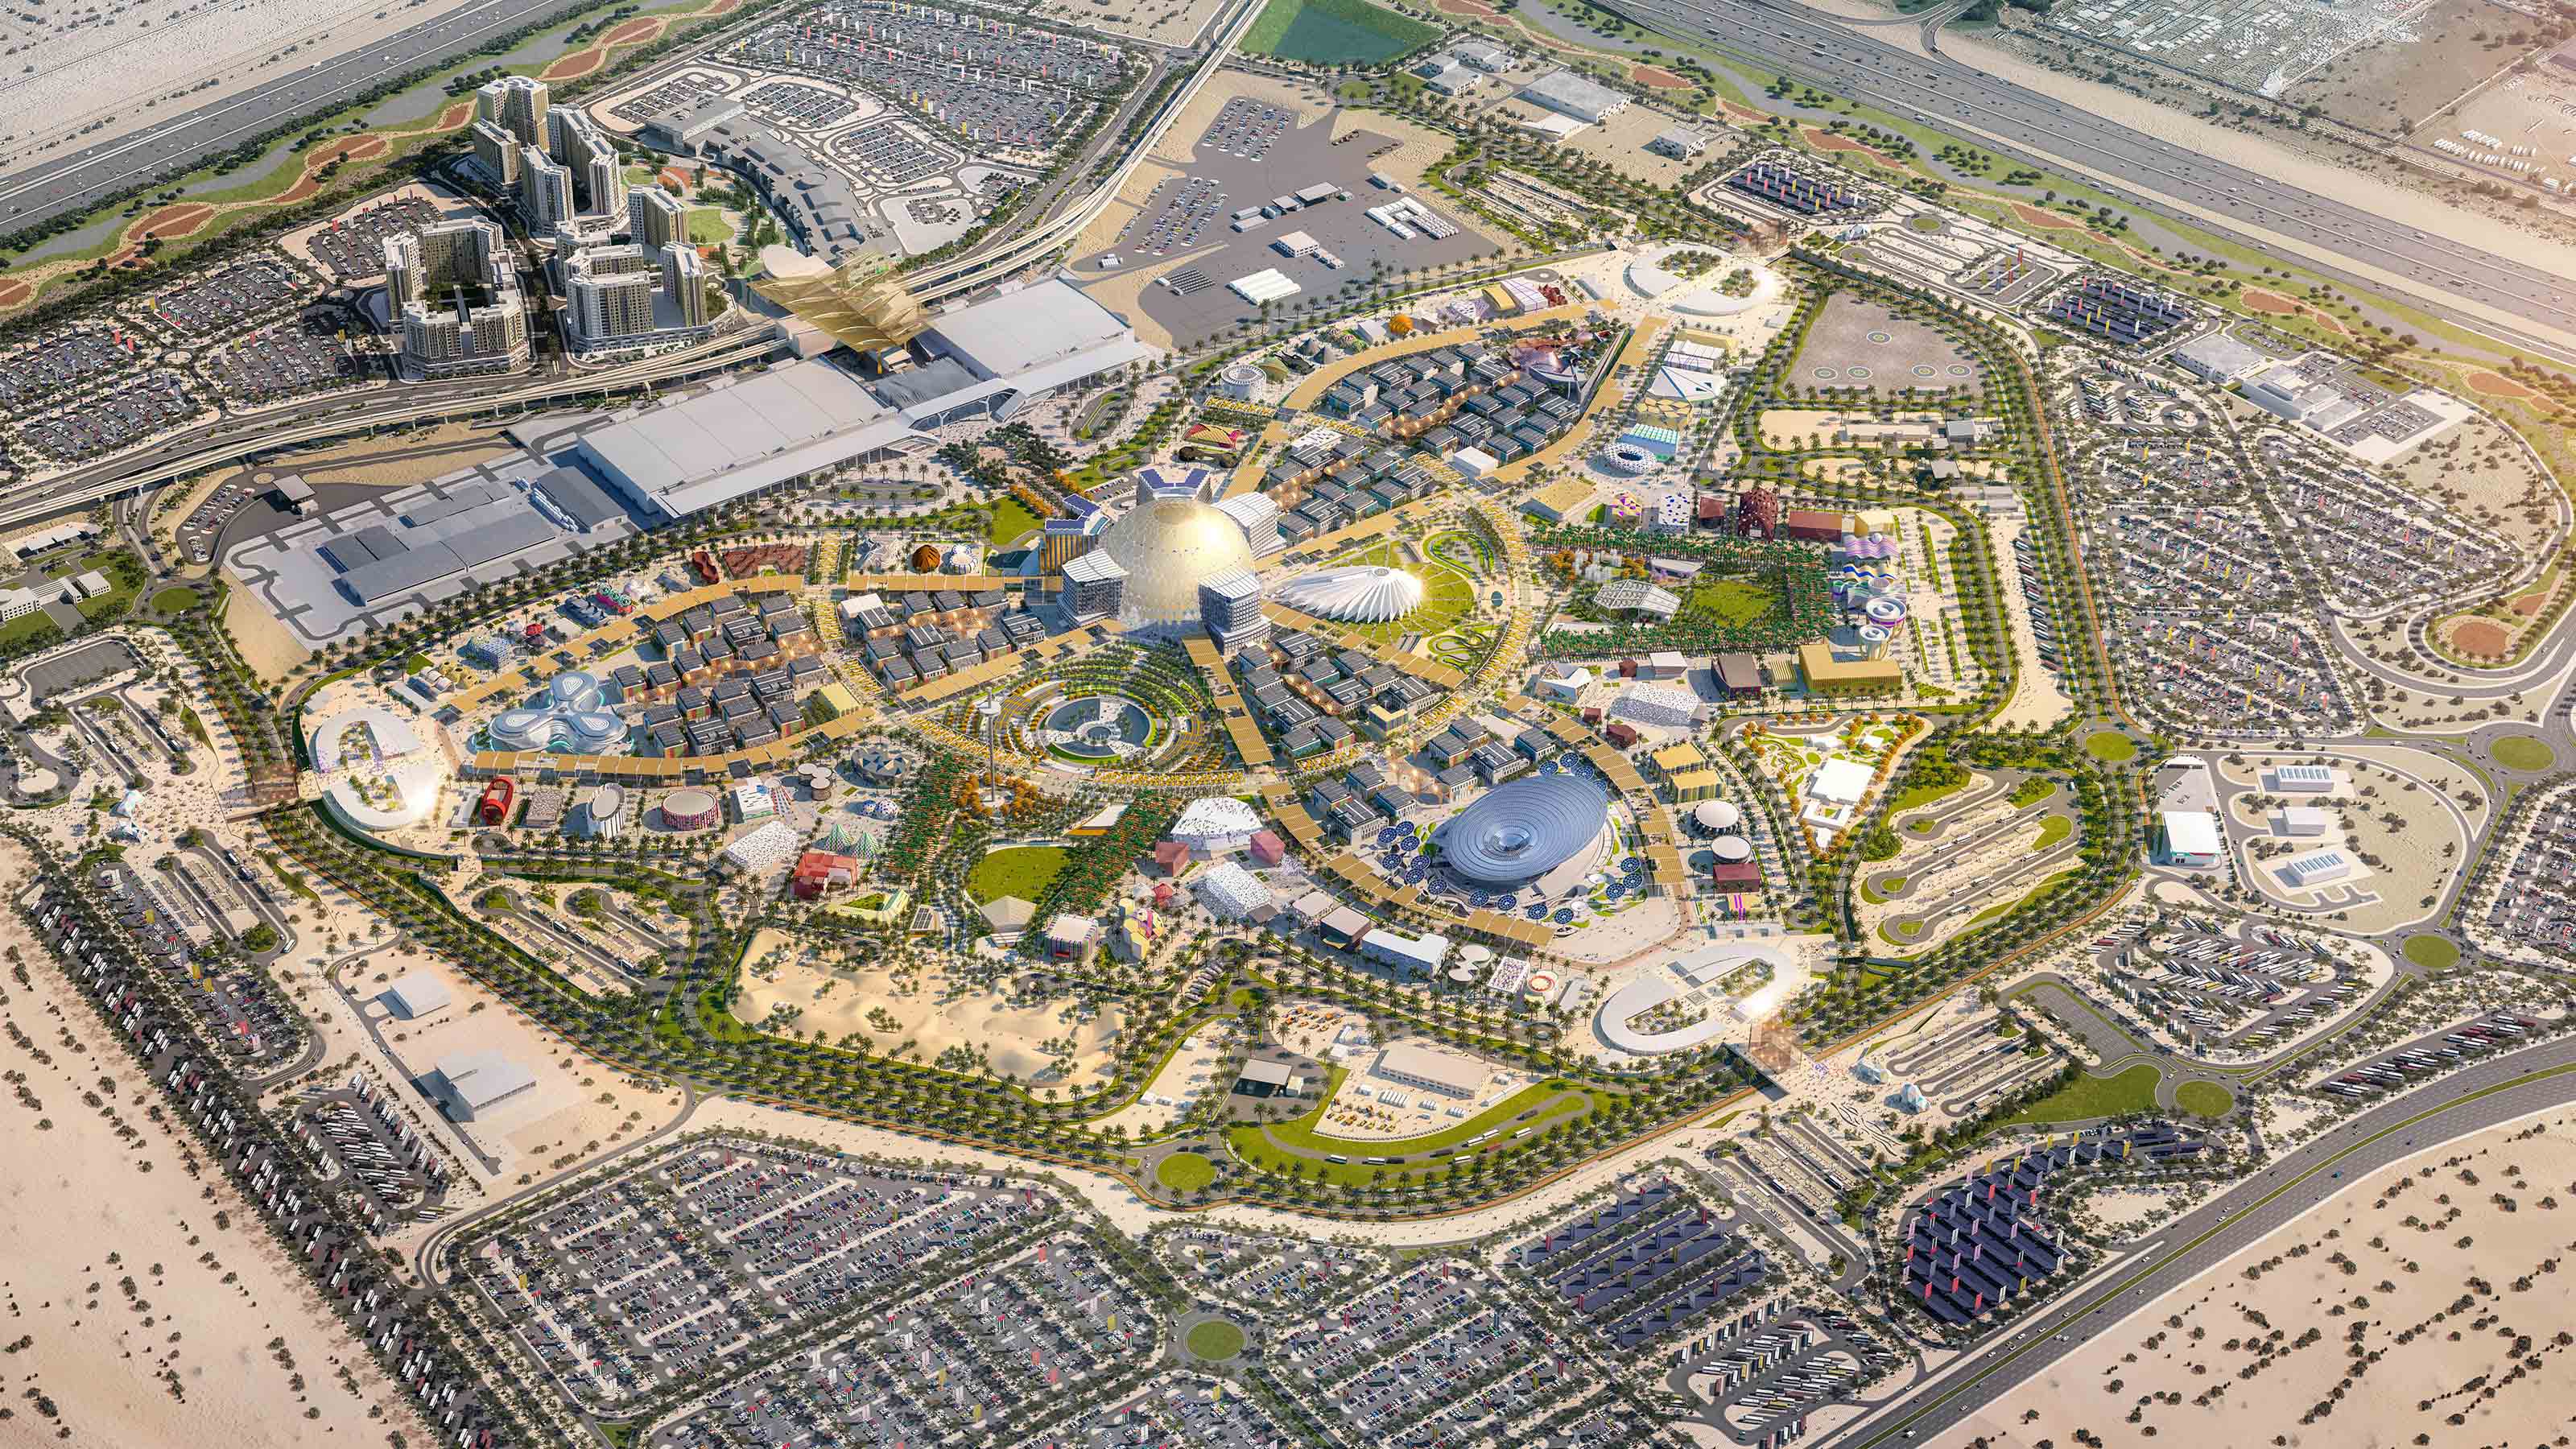 Daytime Ariel View of Dubai's World Expo 2020